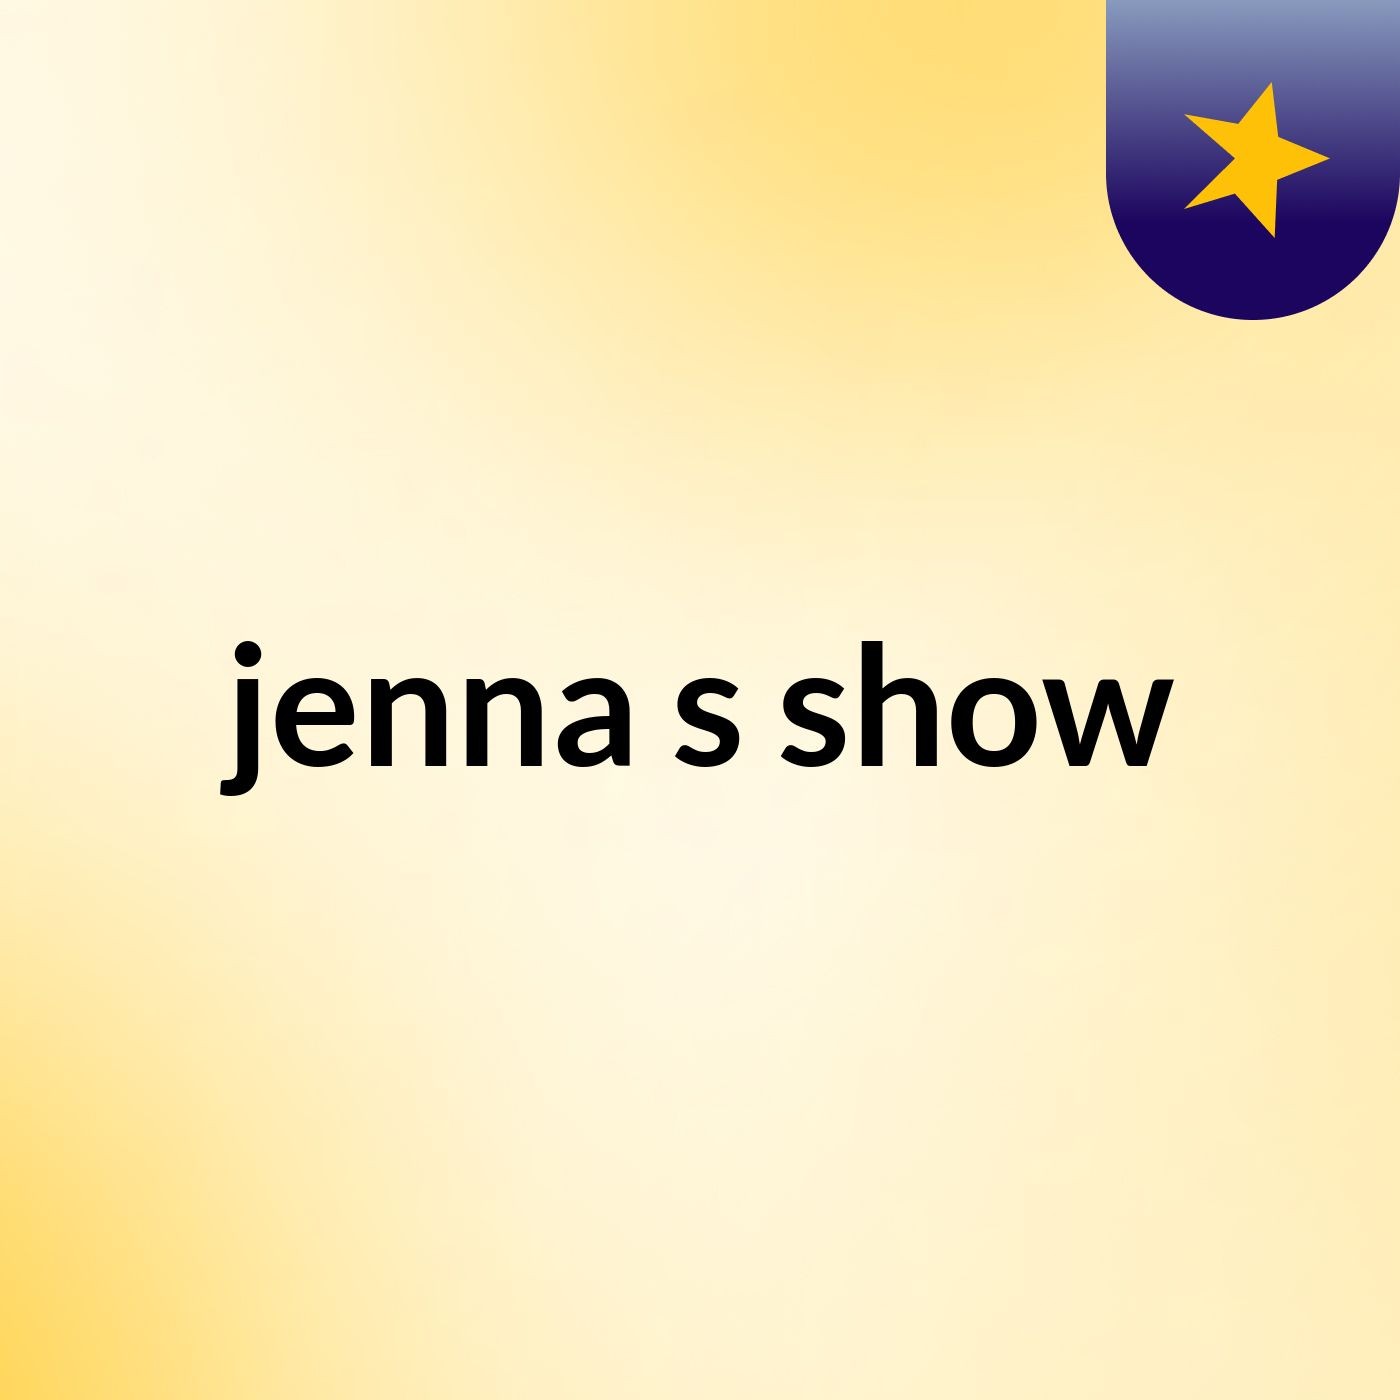 jenna's show